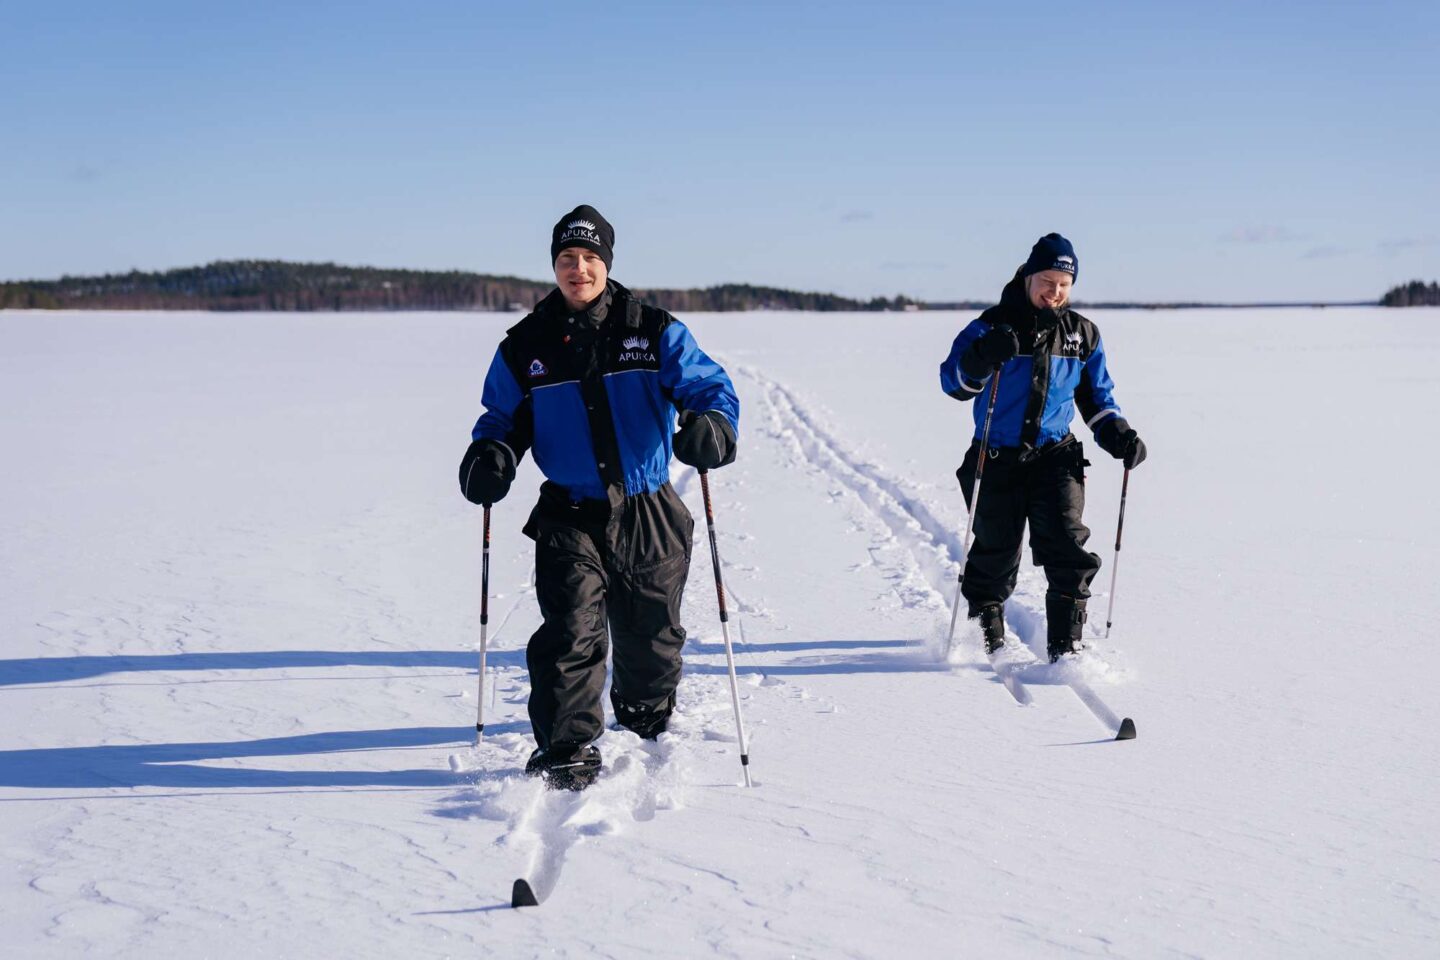 finnish lapland apukka resort nordic skiing